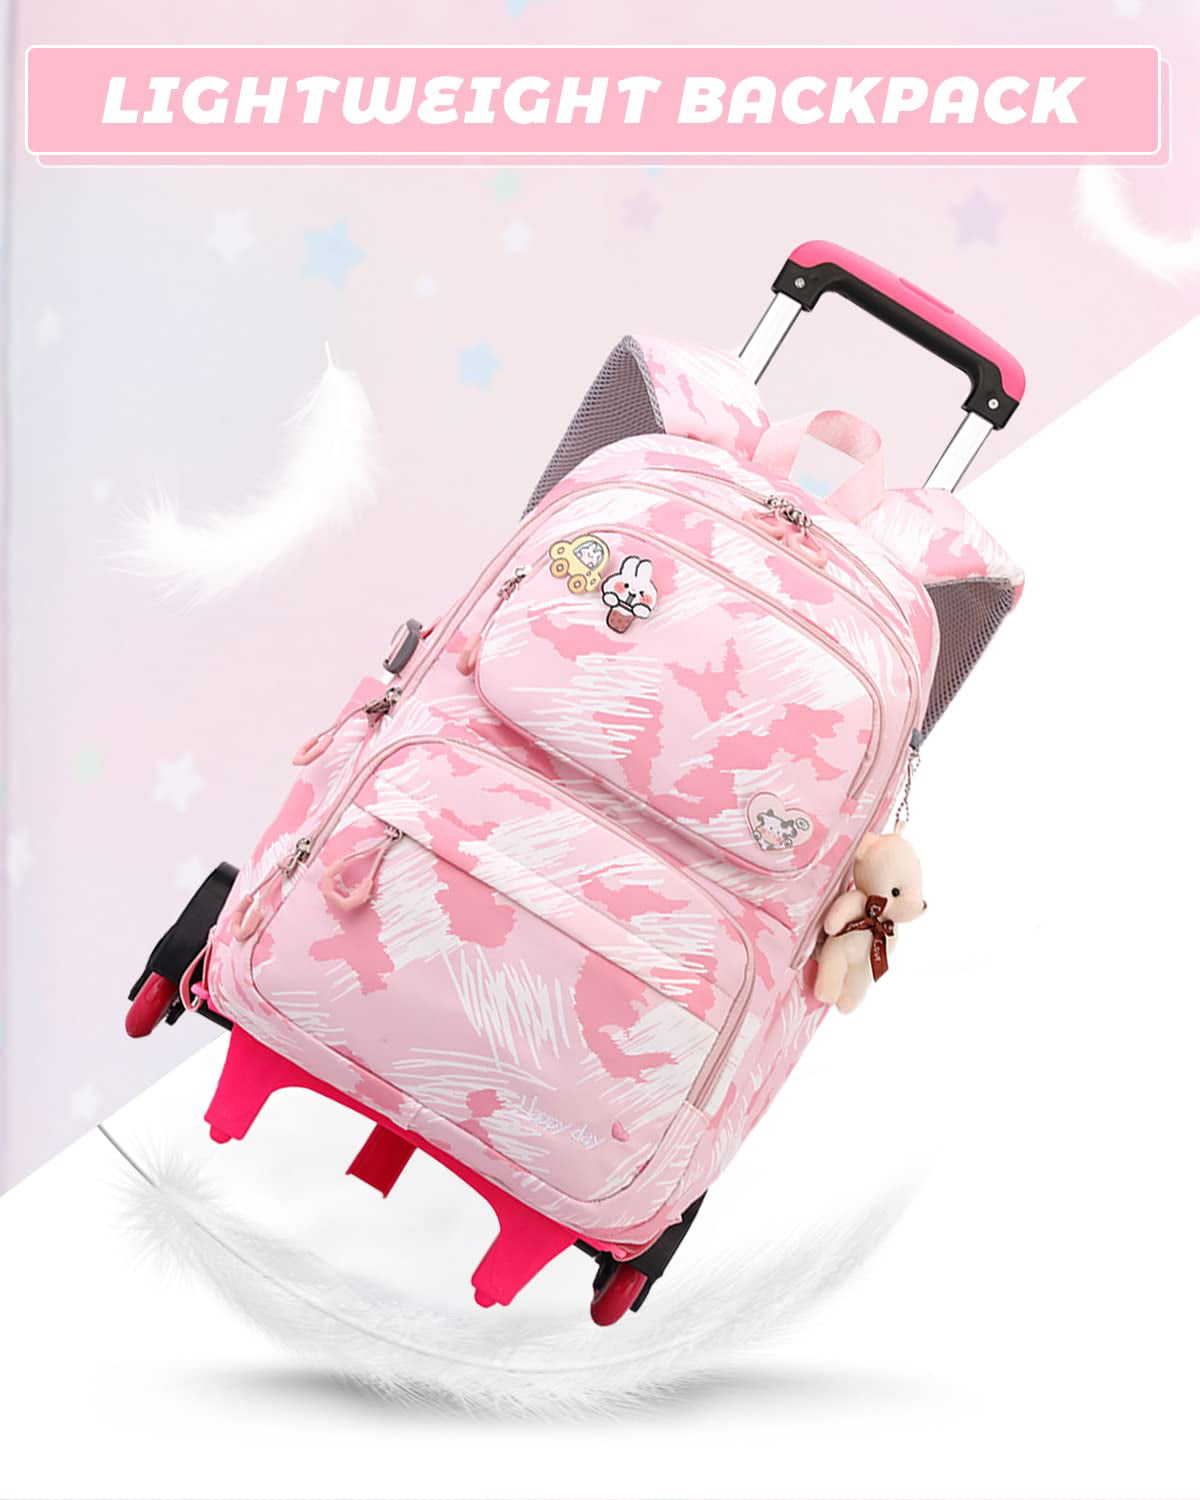 Ivyh Lvyh Kids Rolling Backpack for Girls Boys,Trolley Wheeled Backpacks Waterproof Elementary School Bag Travel Outdoor, Kids Unisex, Size: 30, Pink